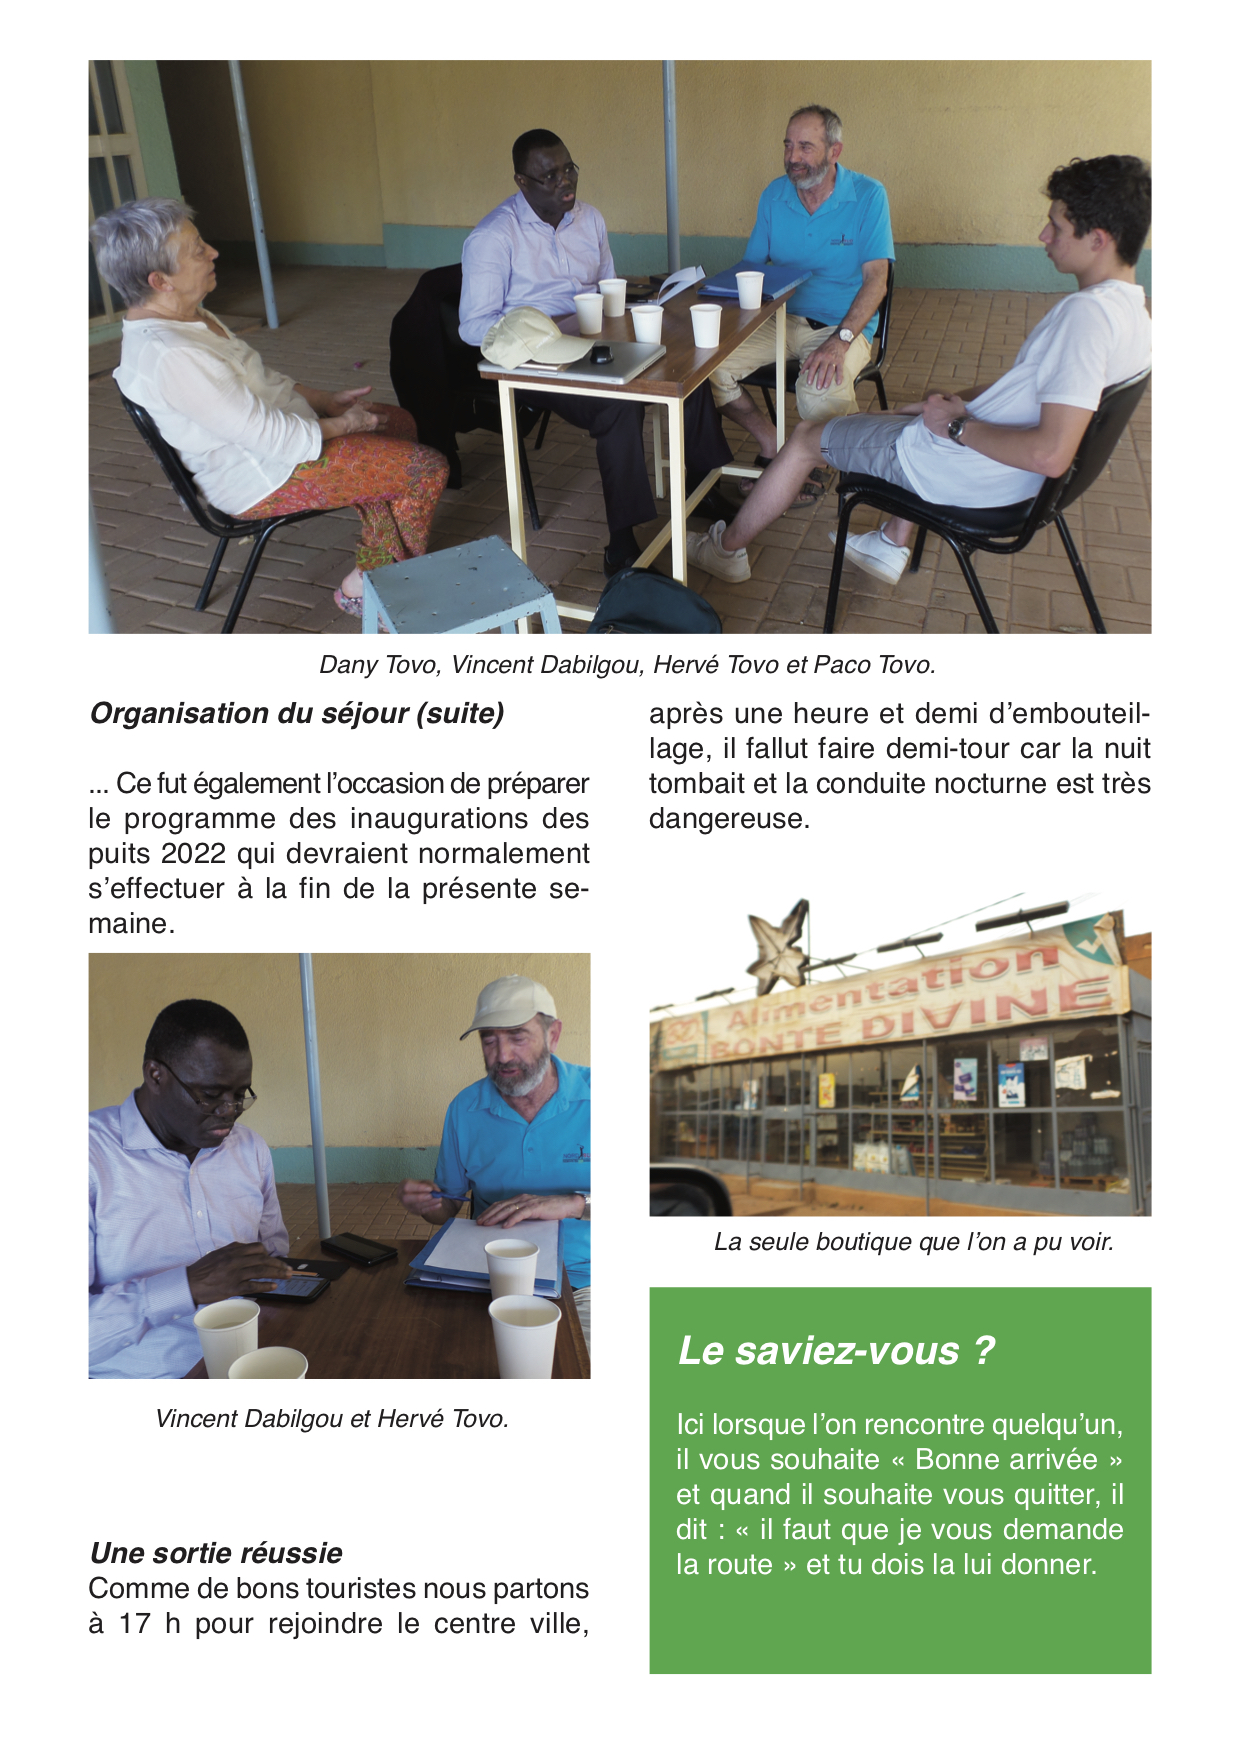 Journal de voyage au Burkina Faso - Lundi 28 février 2022 - page 2